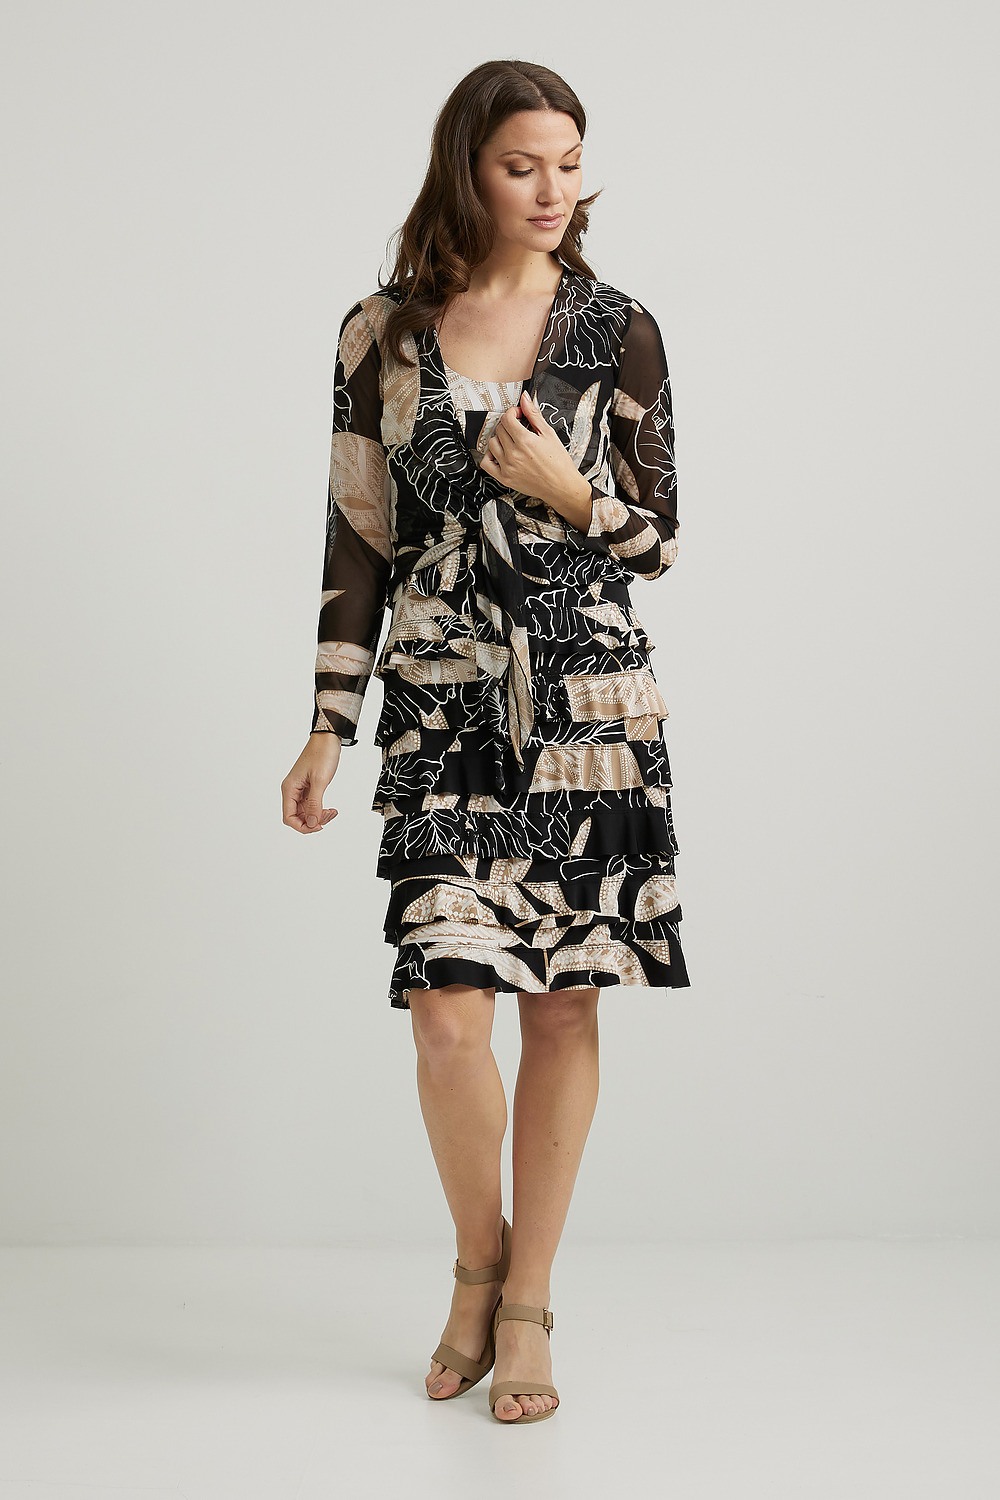 Joseph Ribkoff Ruffle Printed Dress Style 222271. Black/beige/multi